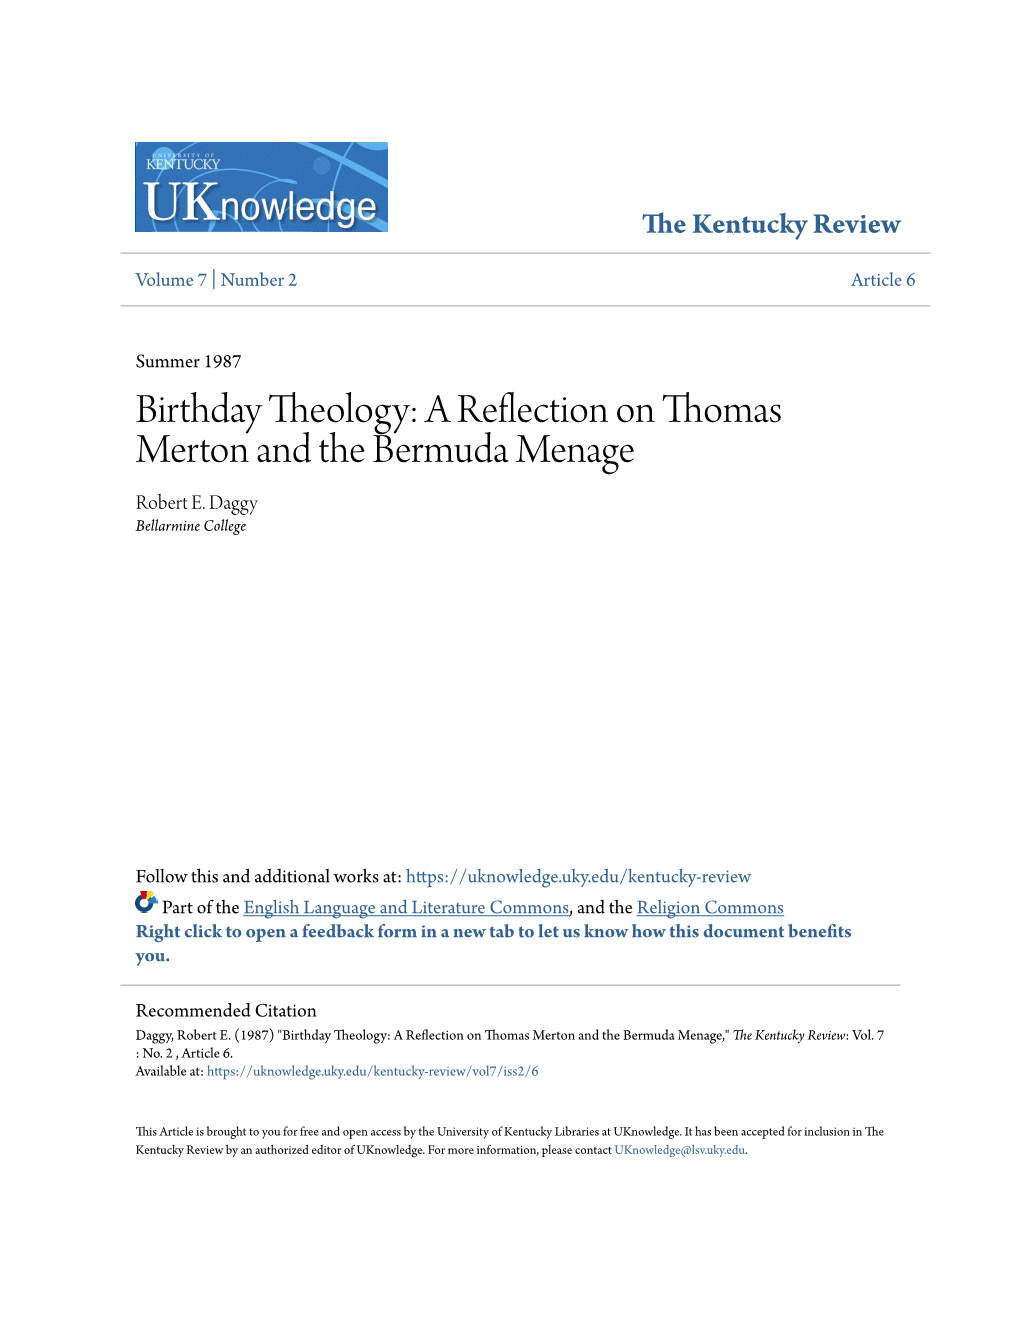 Birthday Theology: a Reflection on Thomas Merton and the Bermuda Menage Robert E